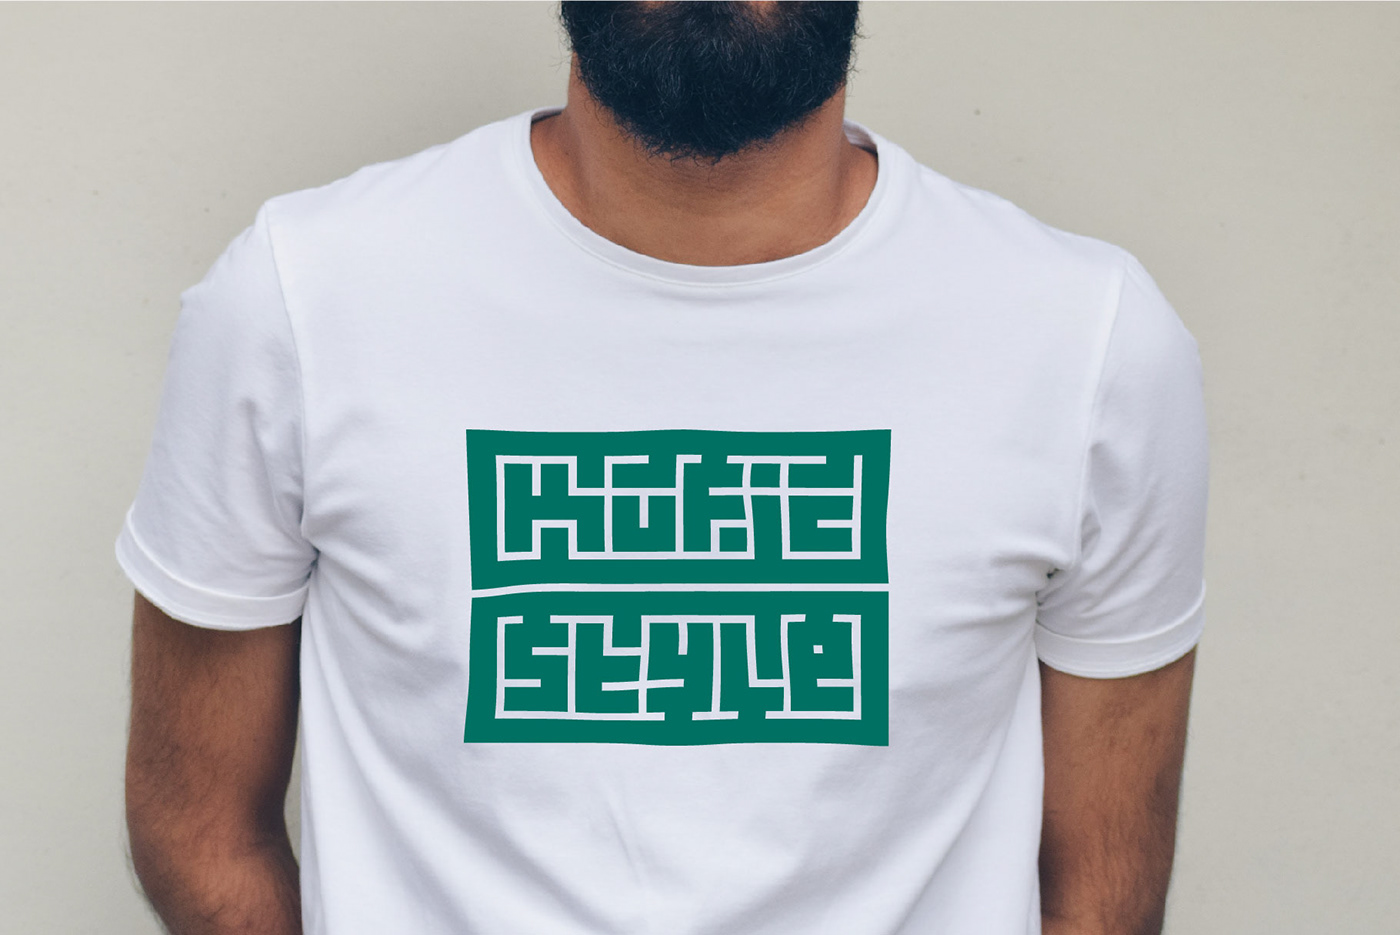 Arabic Kufic kufi latin kufic aquare Kufic Font logo font type design typography  